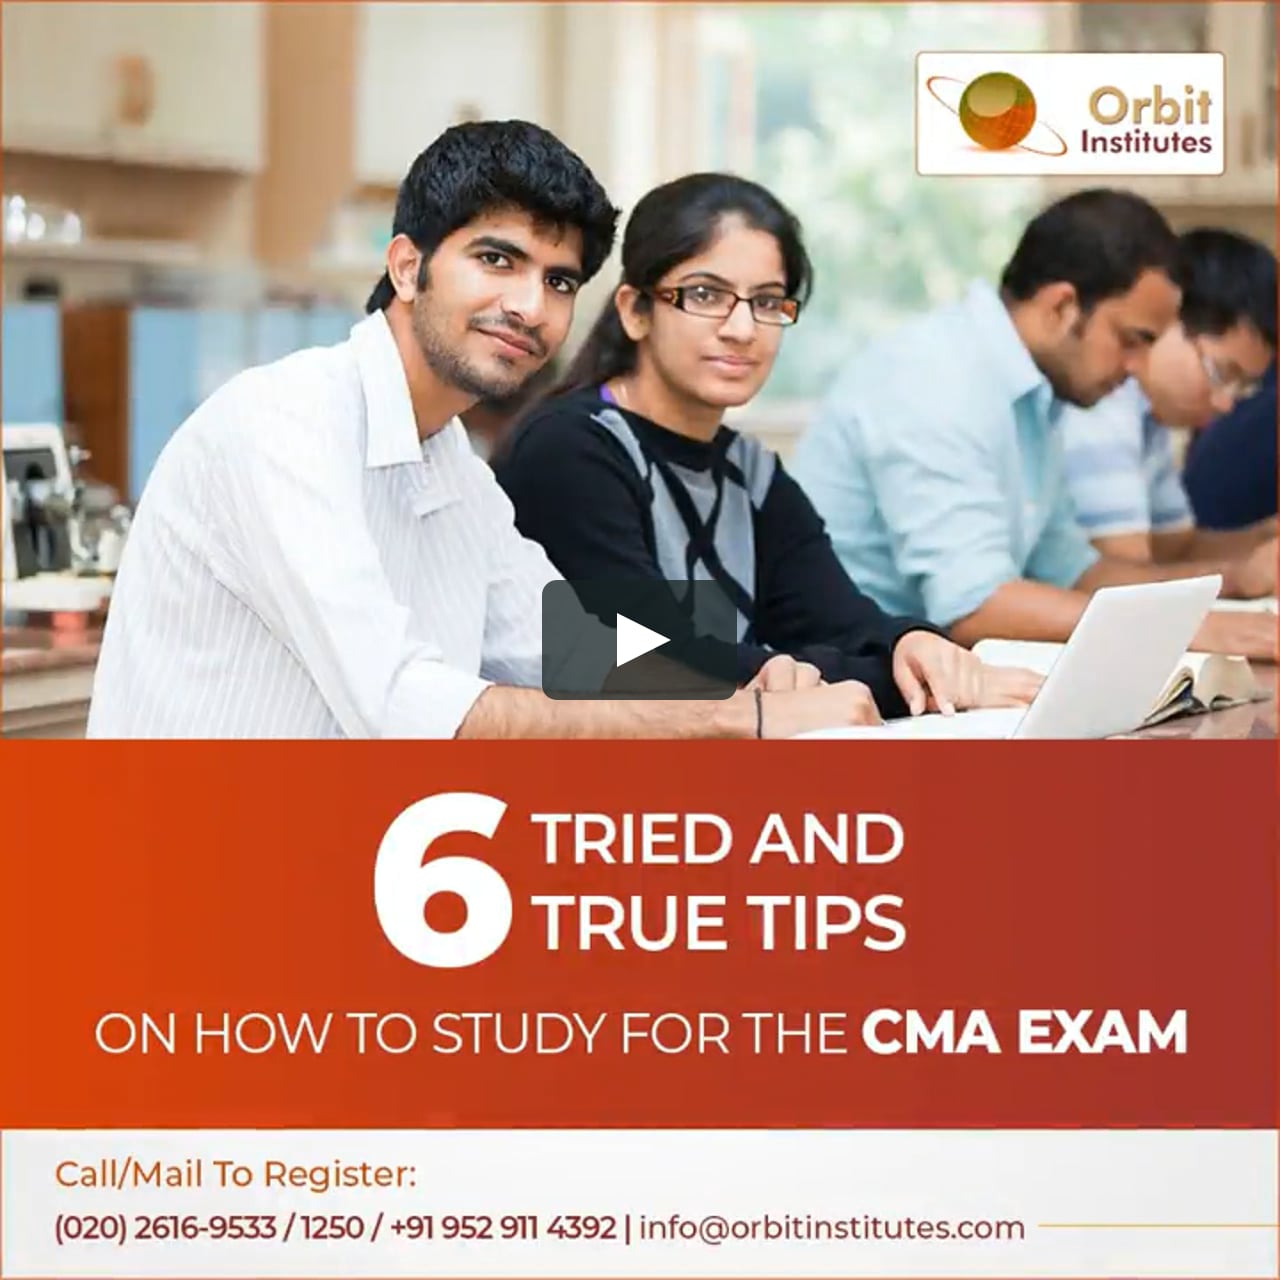 Best Way To Study For Cma Exam